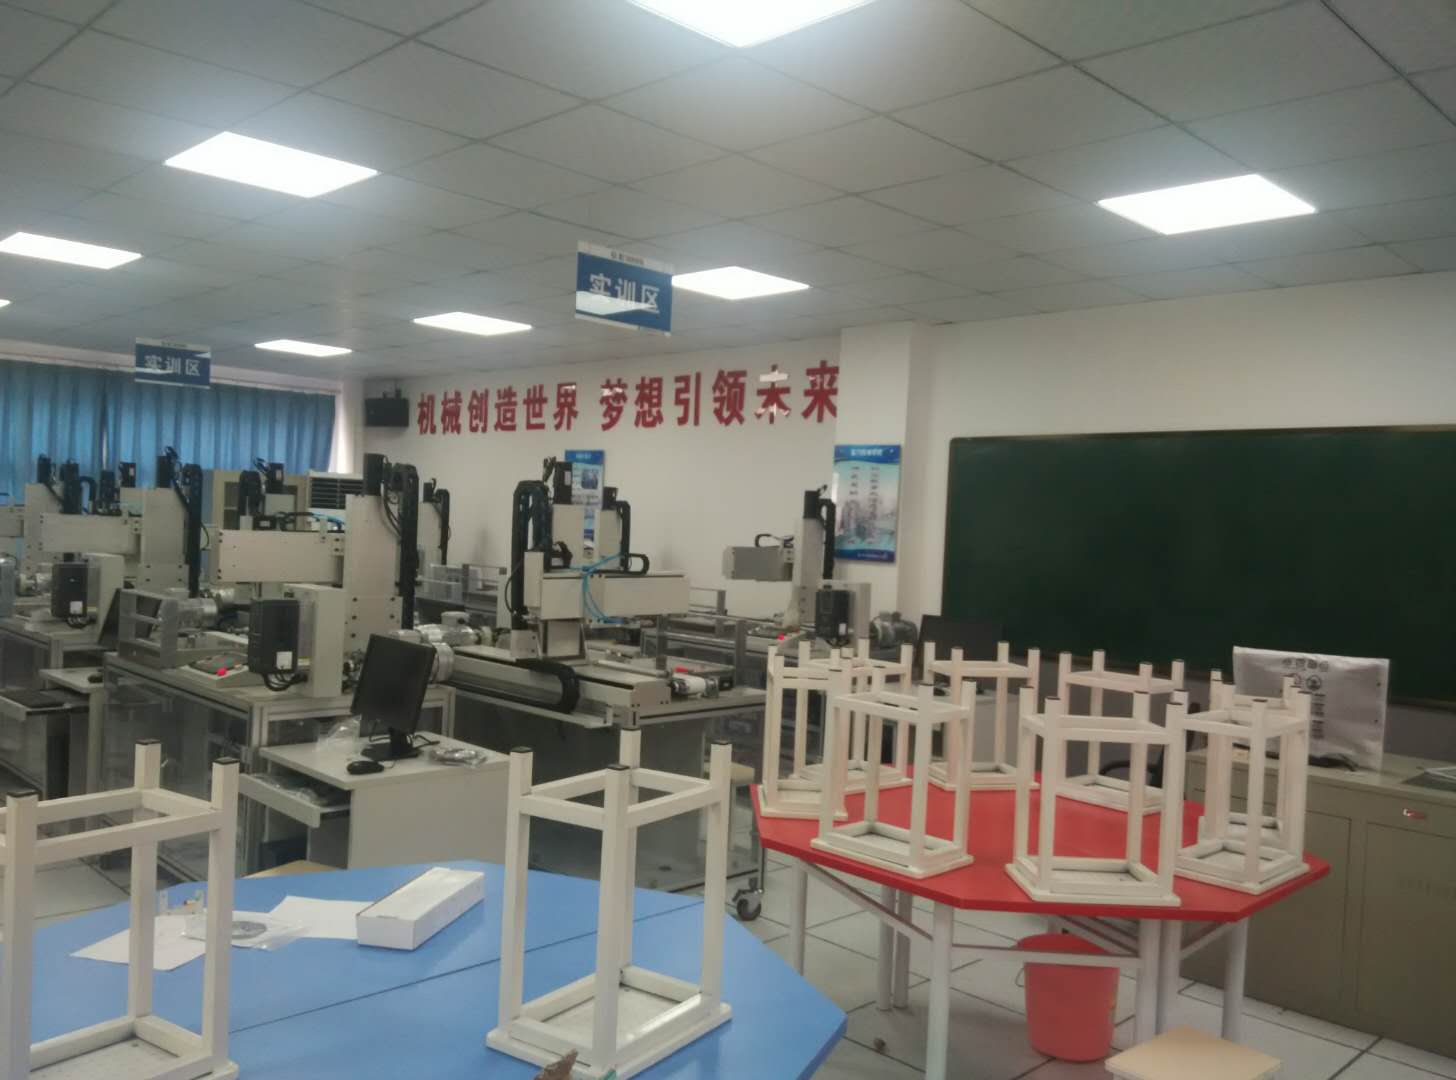 Robot training equipment